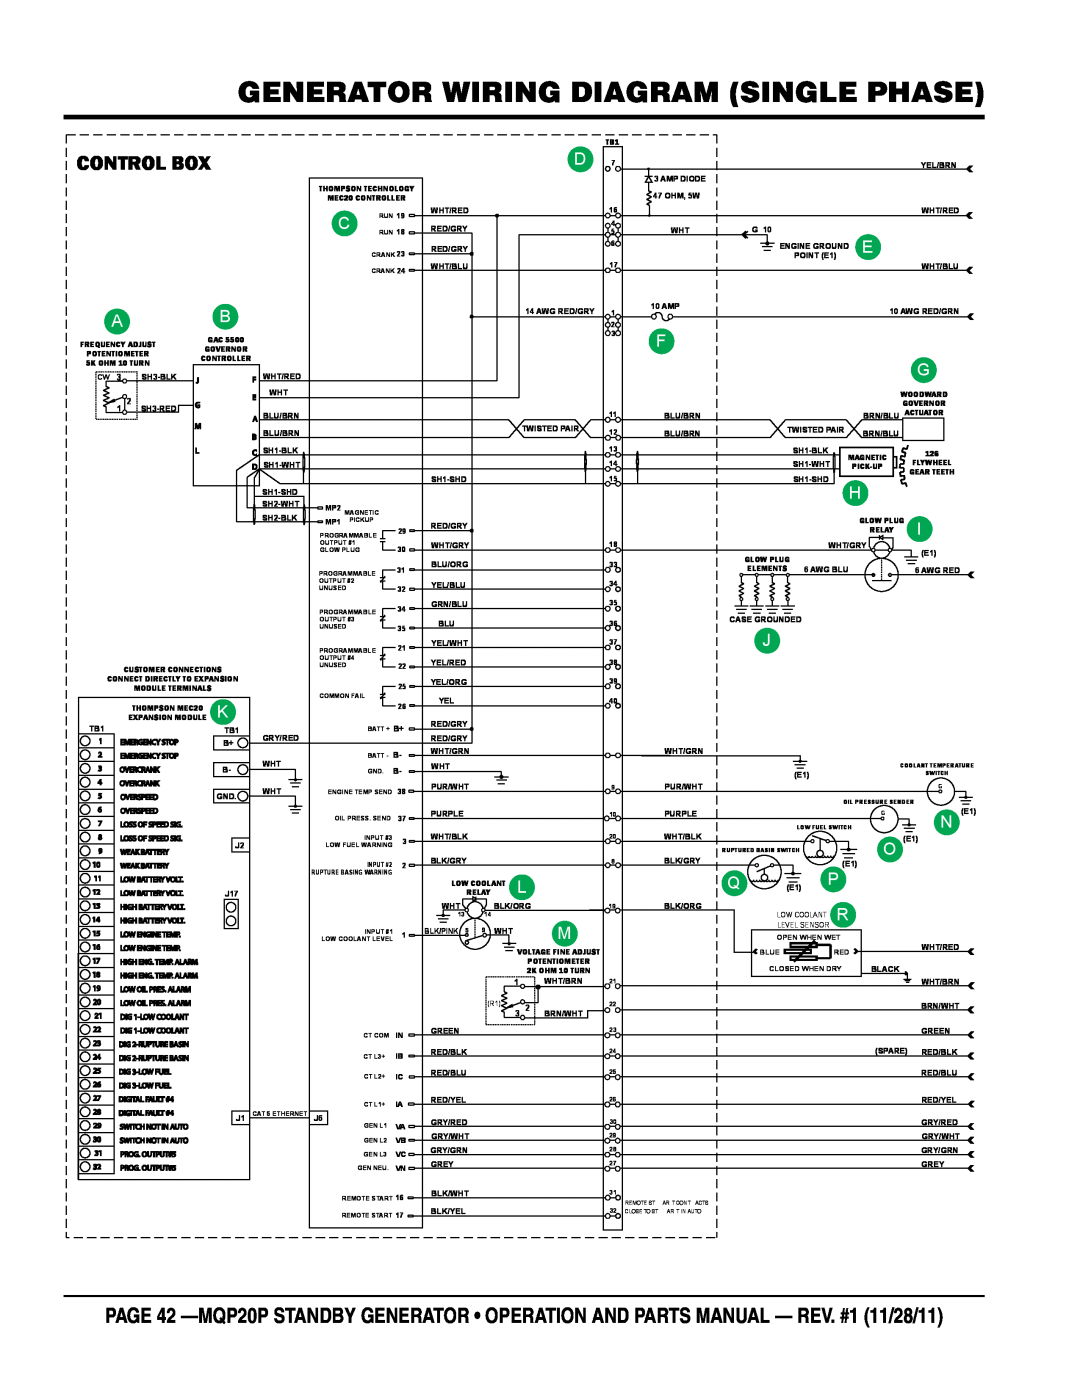 Multiquip MQP20P manual generator Wiring Diagram single phase, Control Box 